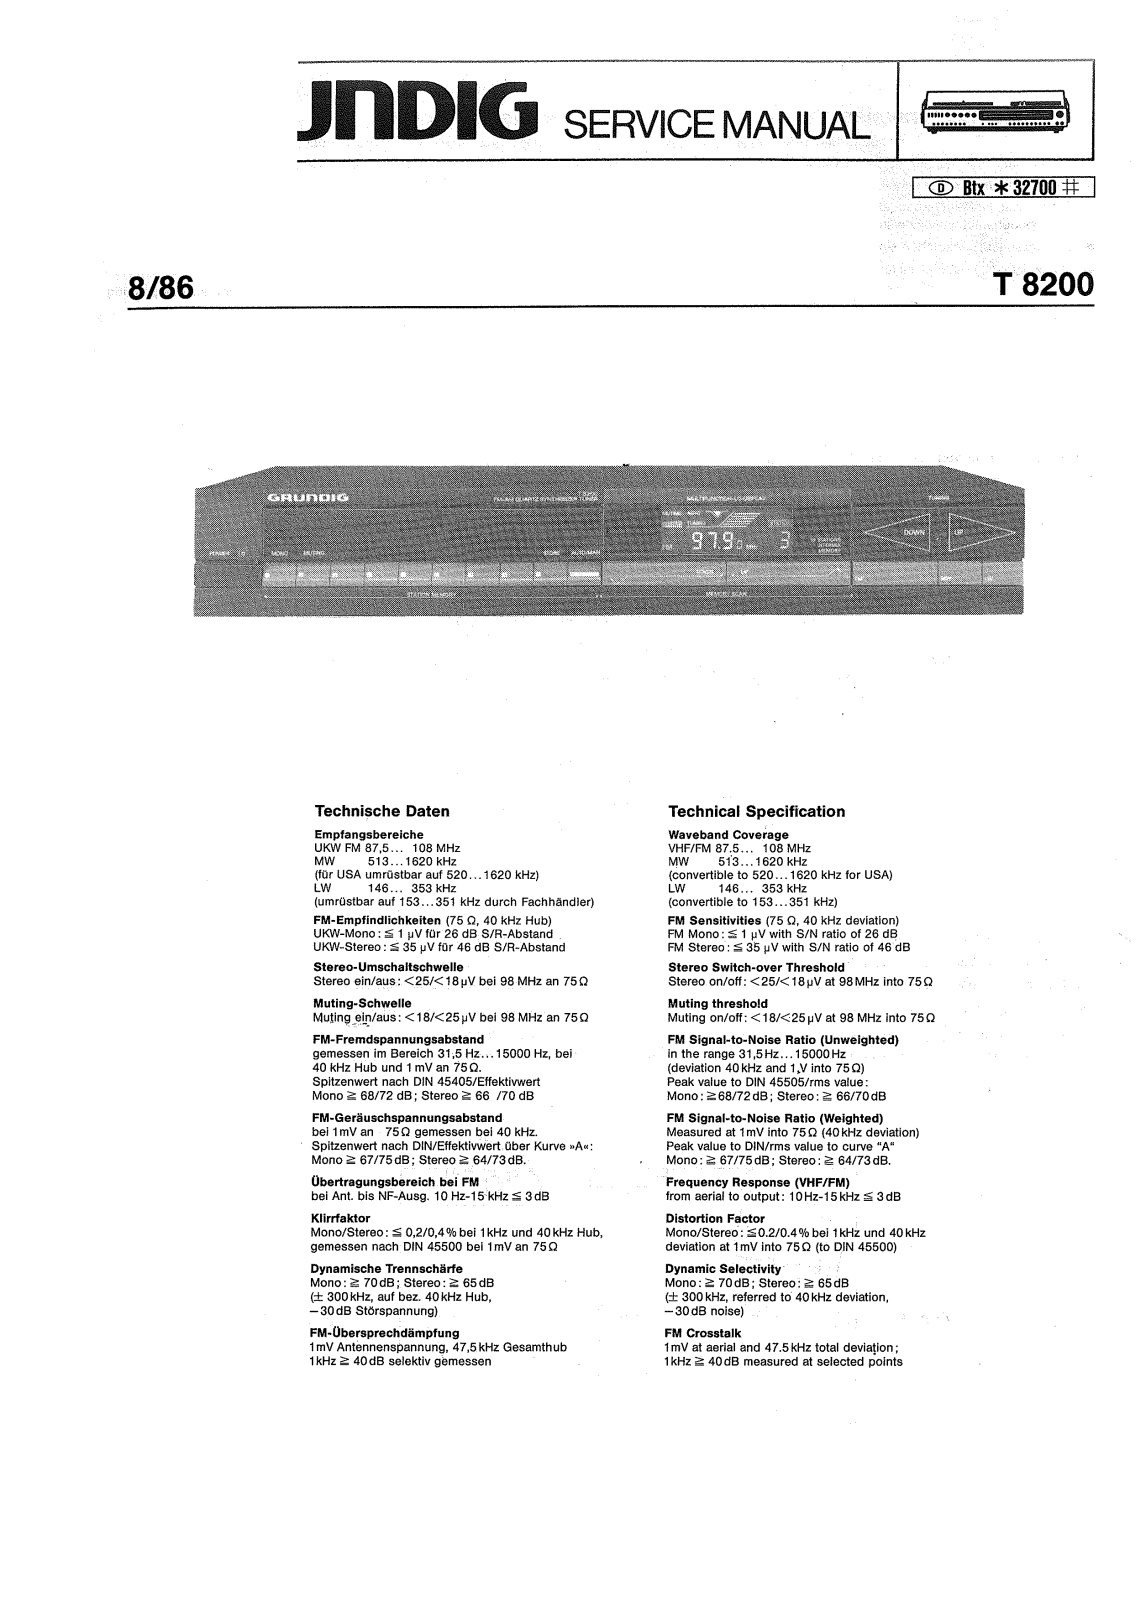 Grundig T-8200 Service Manual